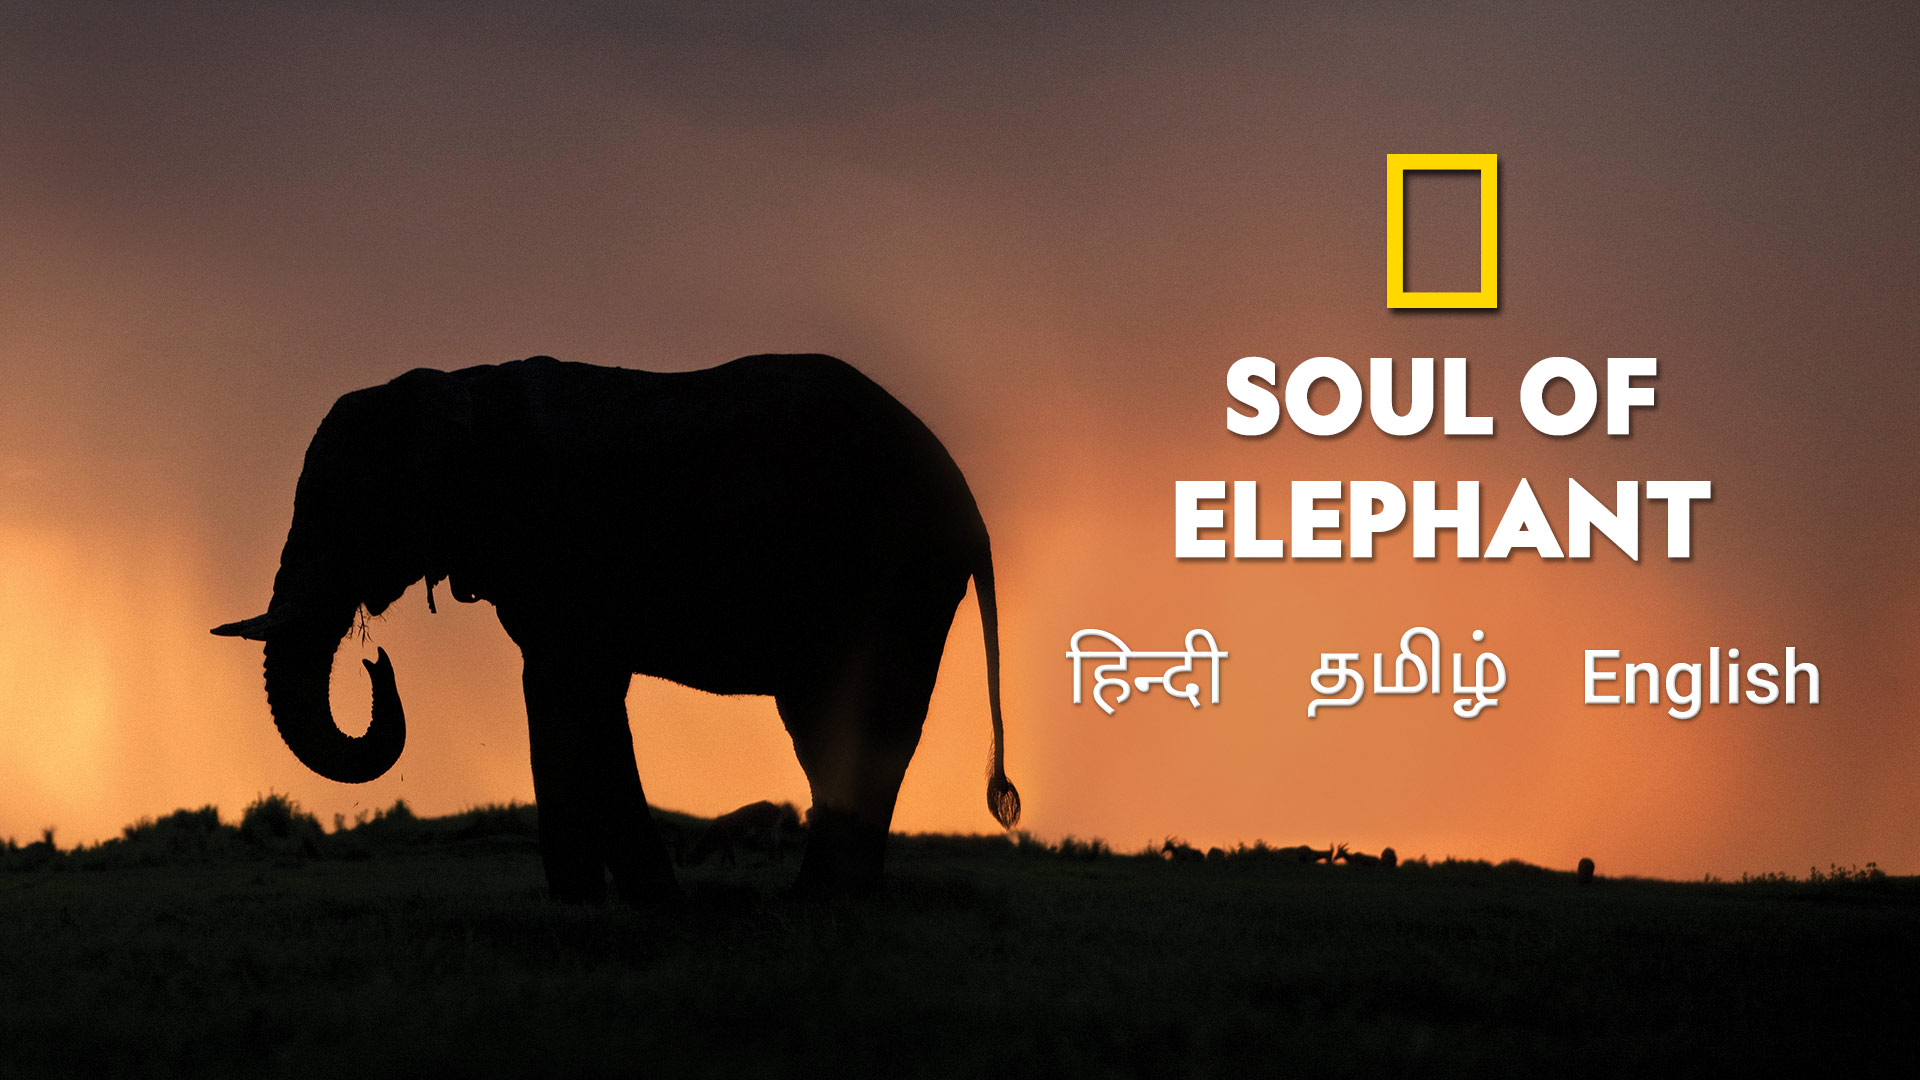 Soul of the Elephant